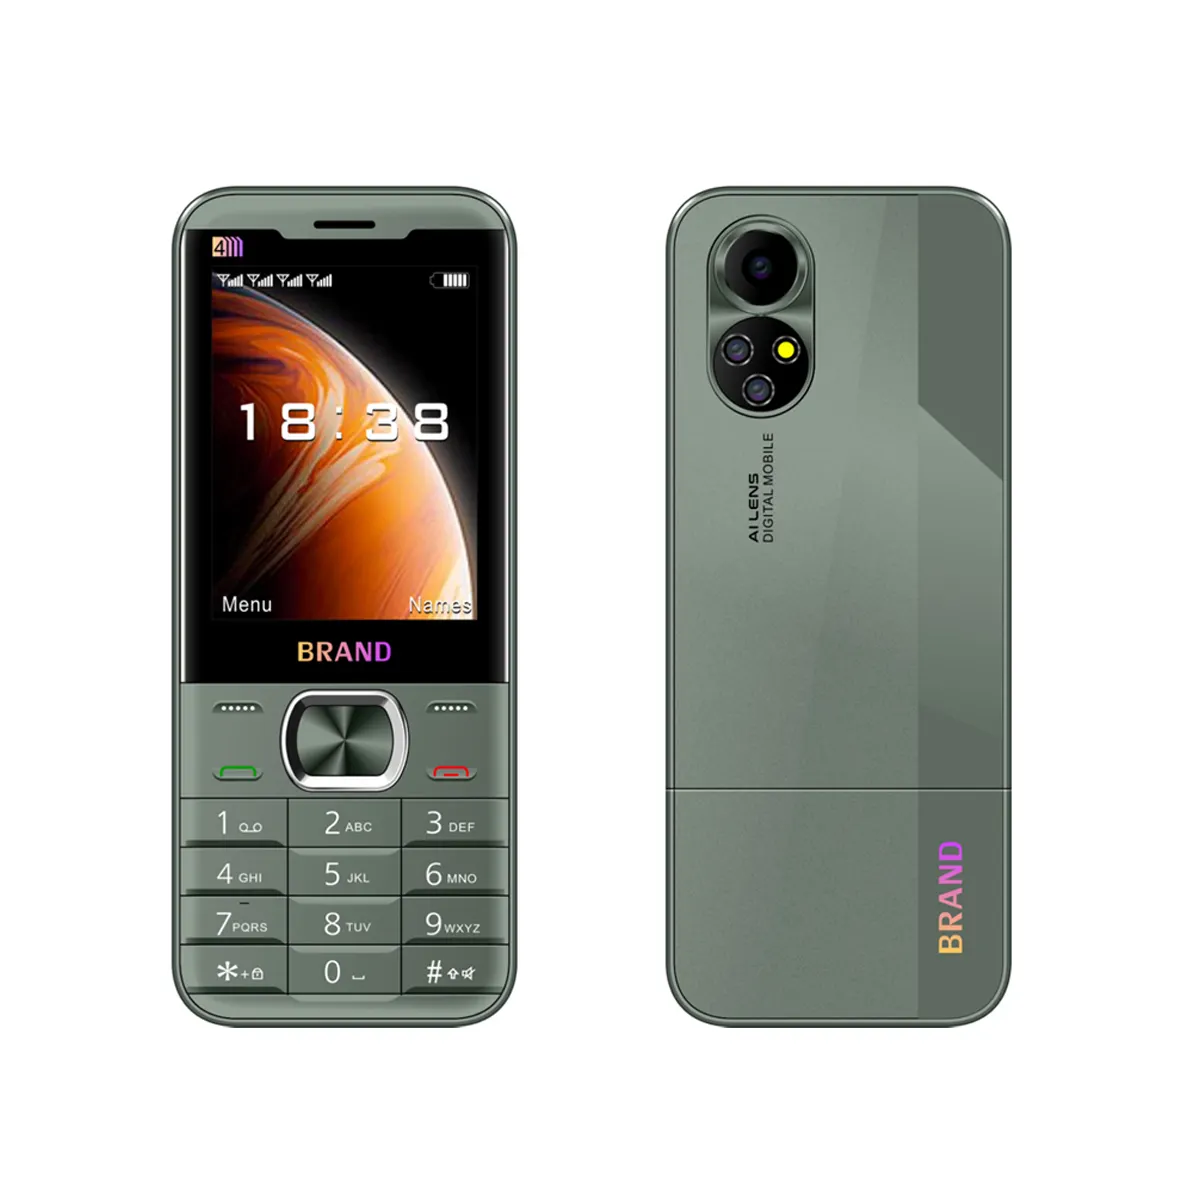 X11-B GSM 2 سيم بطاقات الاستعداد راديو محمول MP3 MP4 ميزة الهاتف كاميرا كبيرة الشعلة مسجل الصين رخيصة الهواتف لوحة المفاتيح